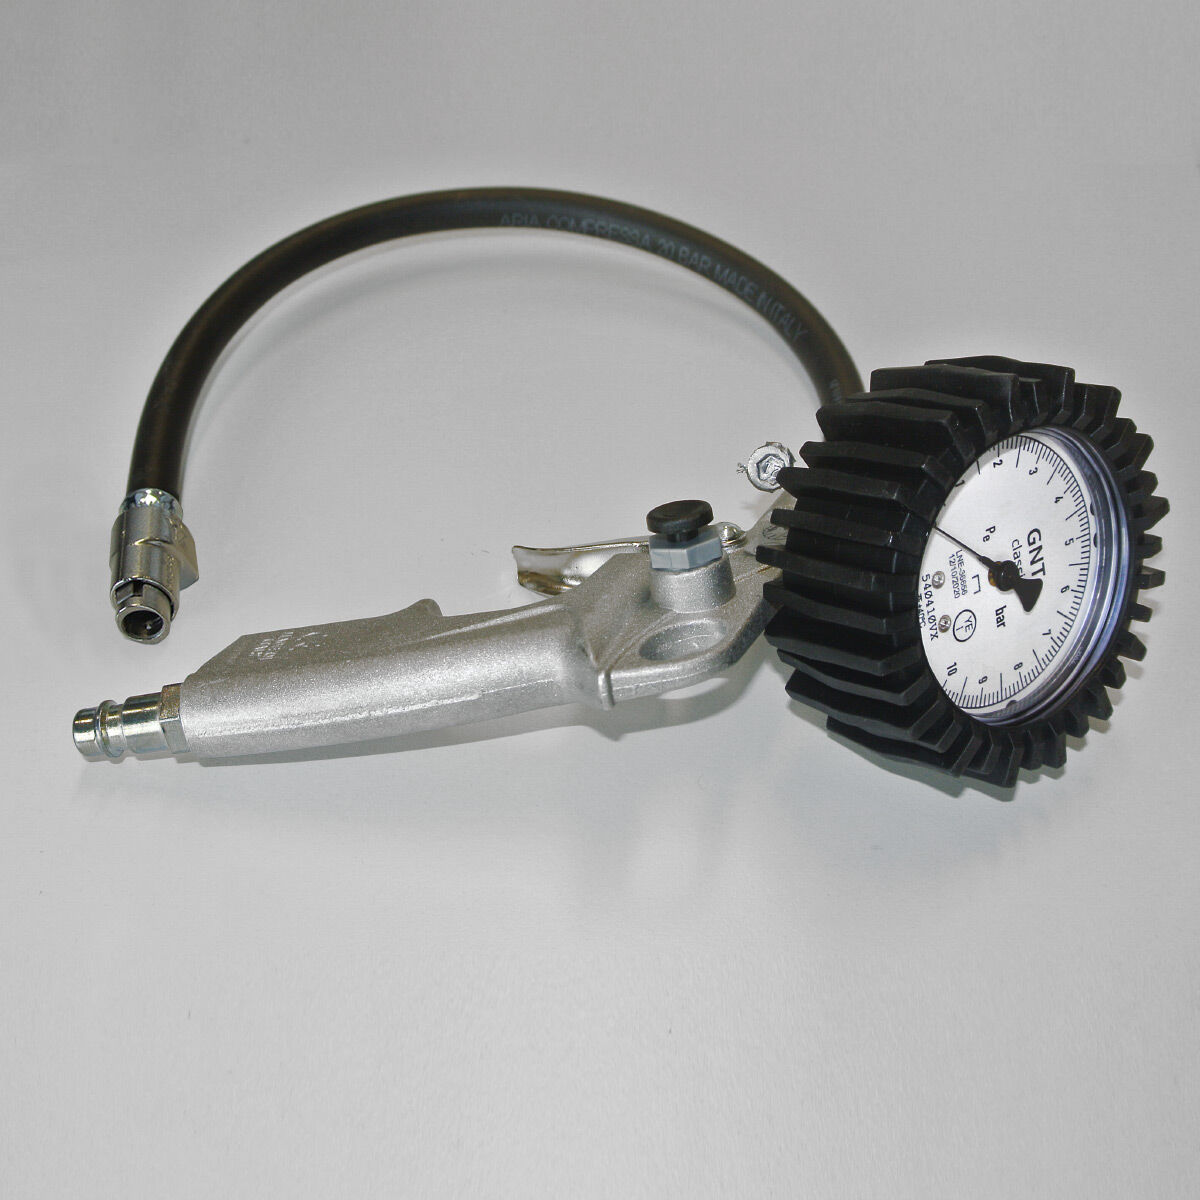 Druckluft Kompressor Schlauch Adapter Set Reifen Ball Fahrradvent